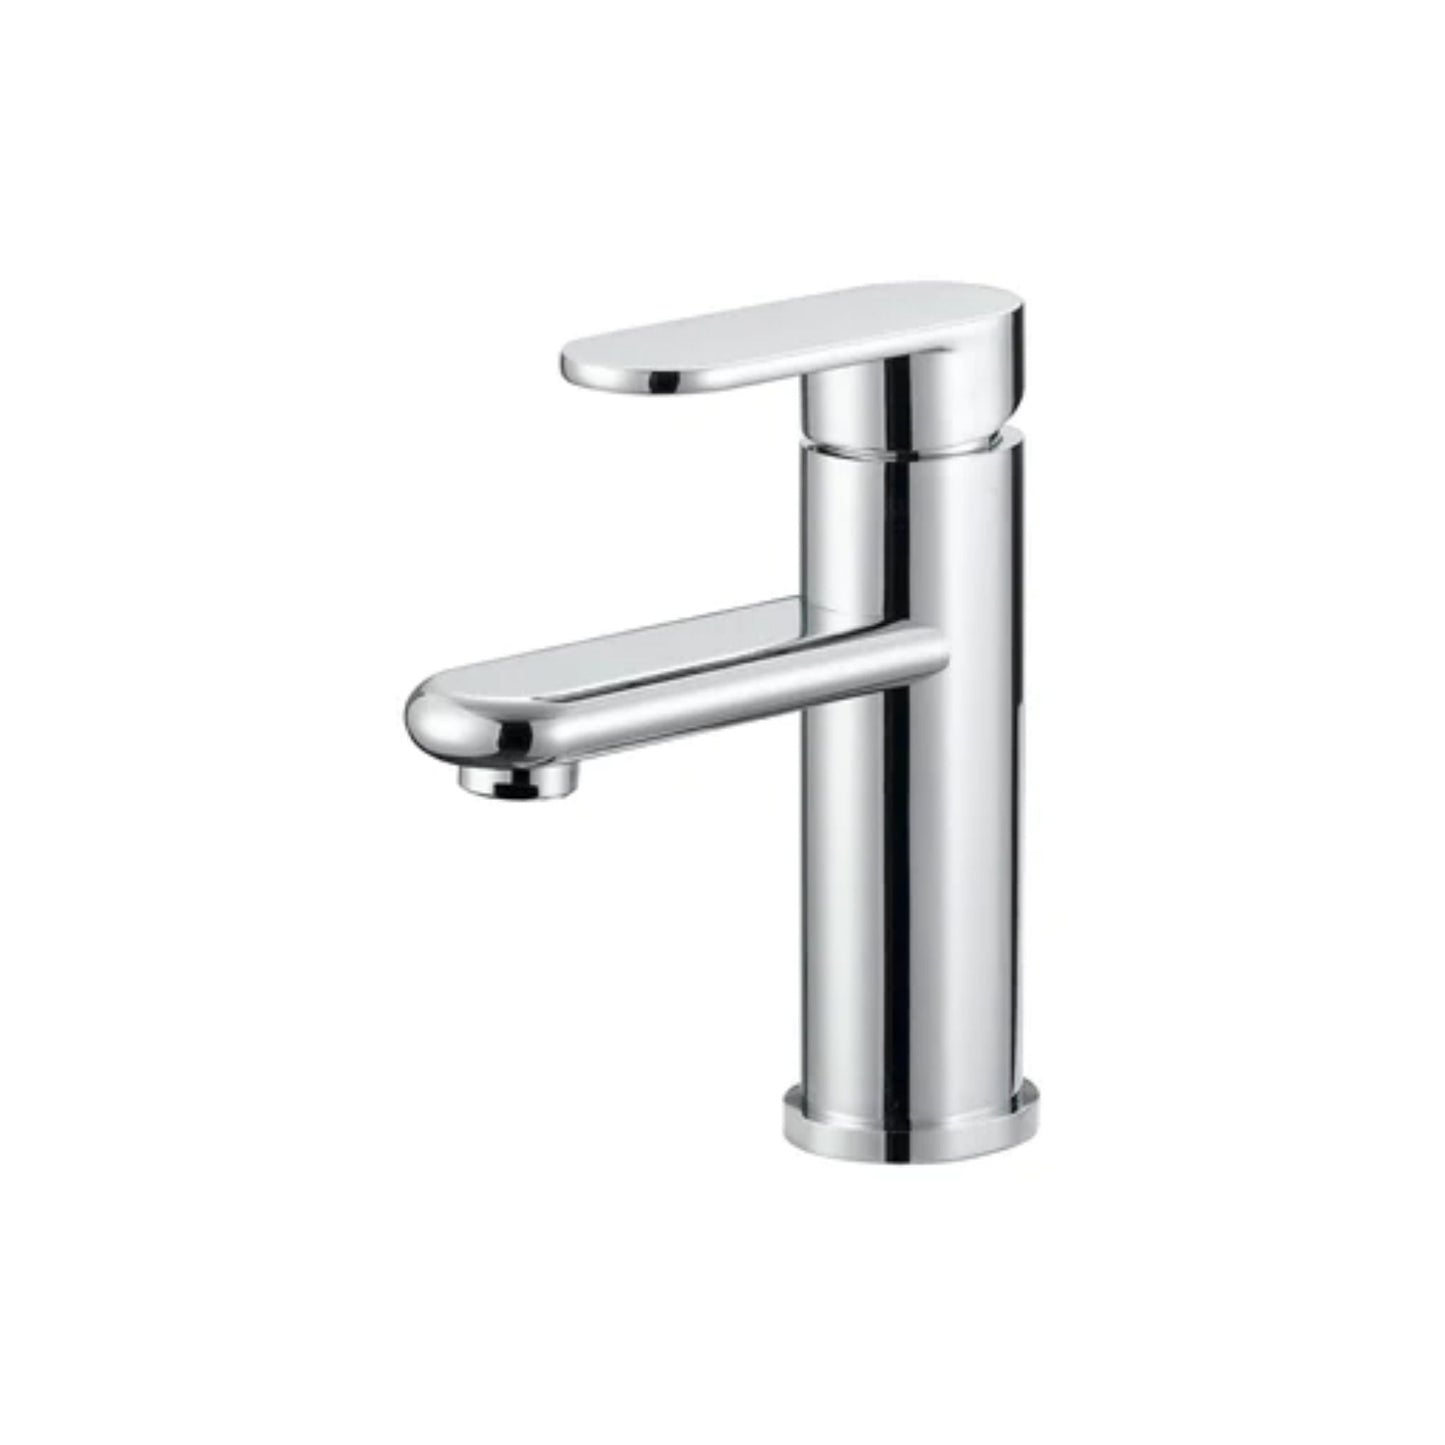 LessCare Chrome Modern Bathroom or Bar Faucet - LB18C